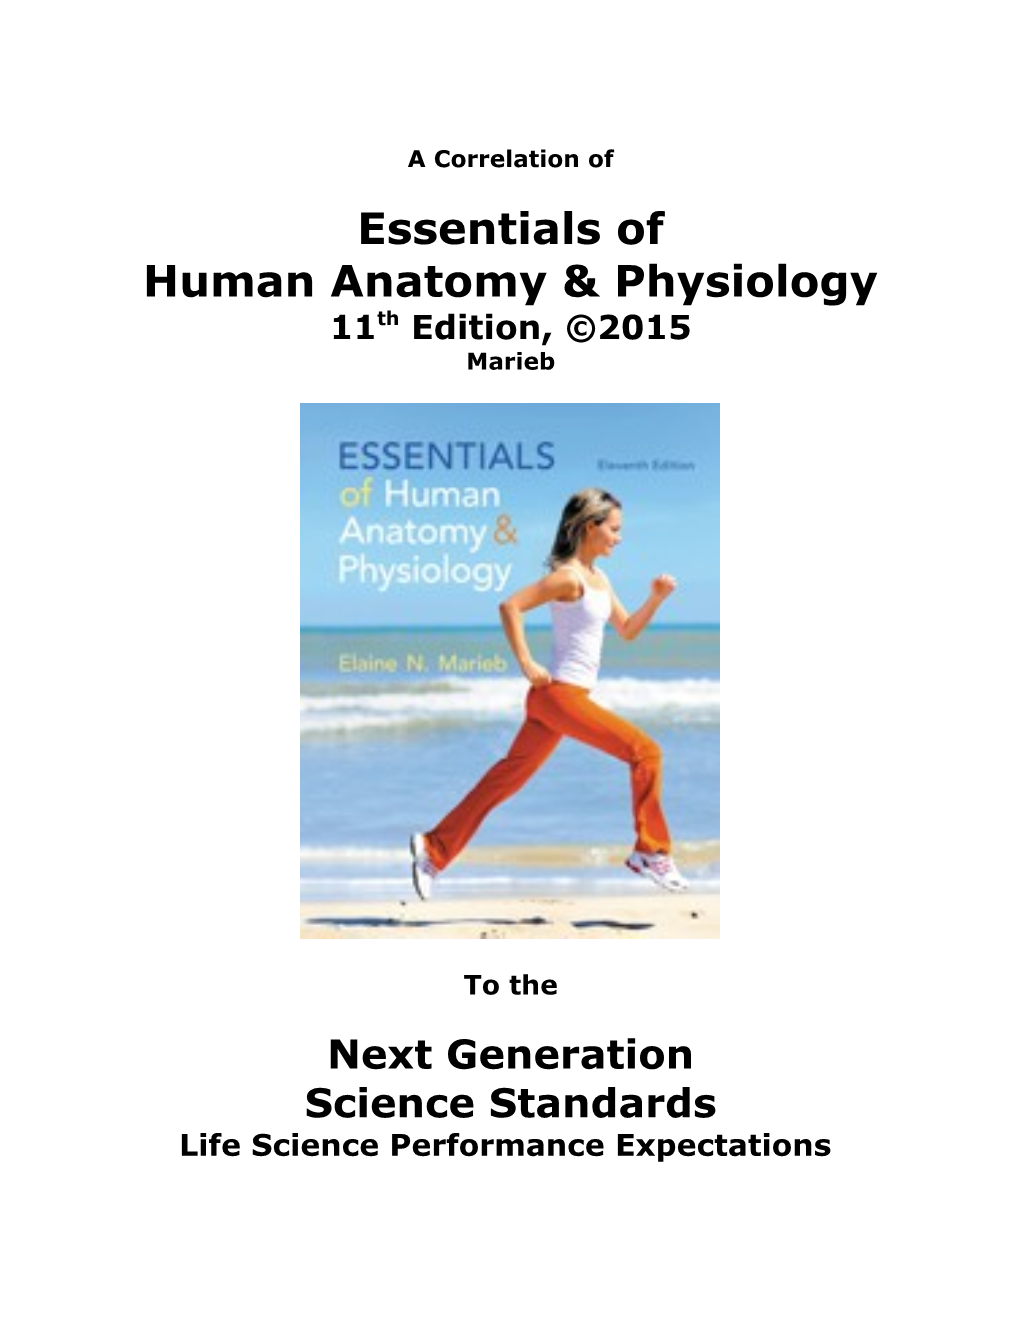 A Correlation of Essentials of Human Anatomy & Physiology, 11Th Edition, 2015